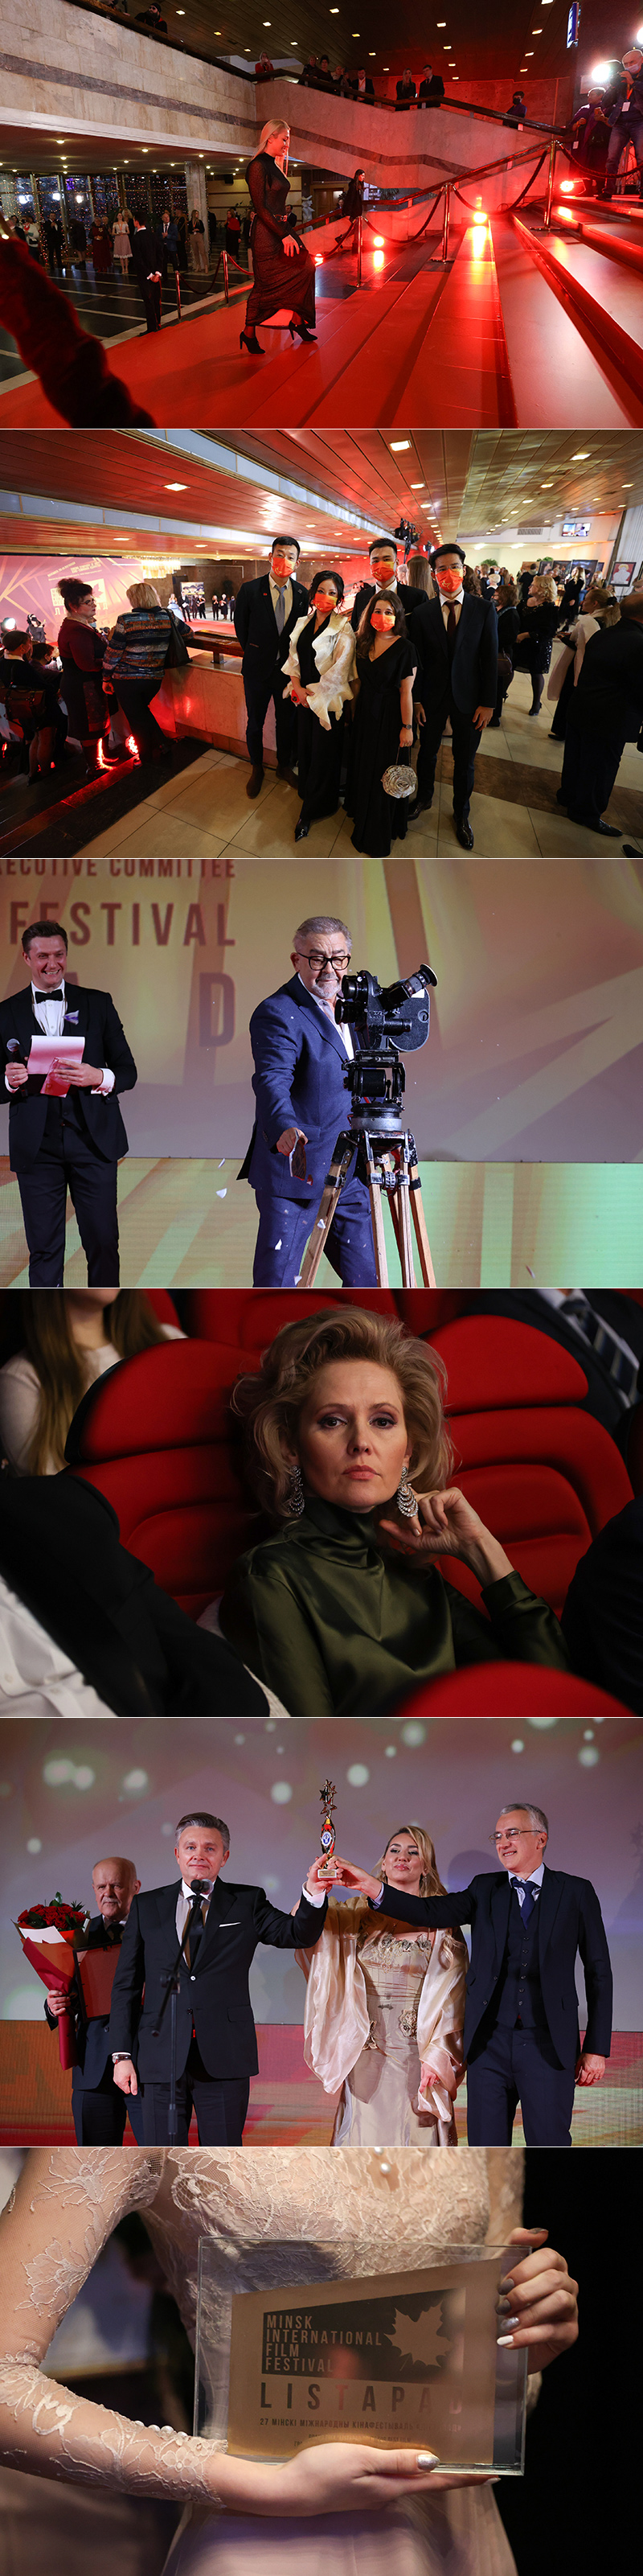 Minsk International Film Festival Listapad-2021